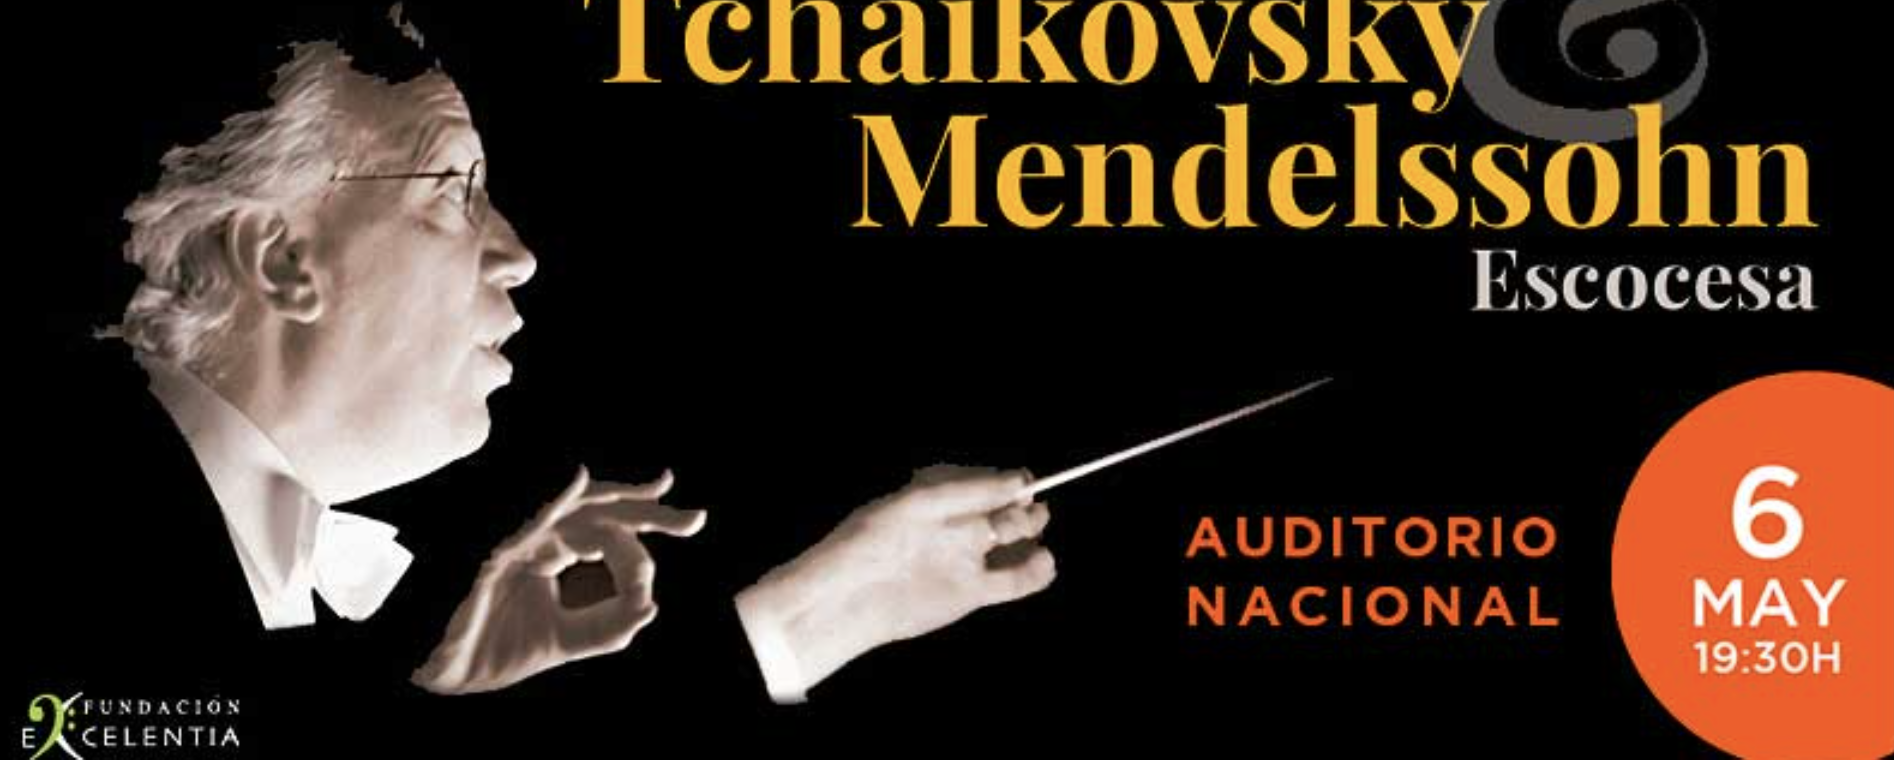 chaikovski-mendelssohn-fundacion-excelentia